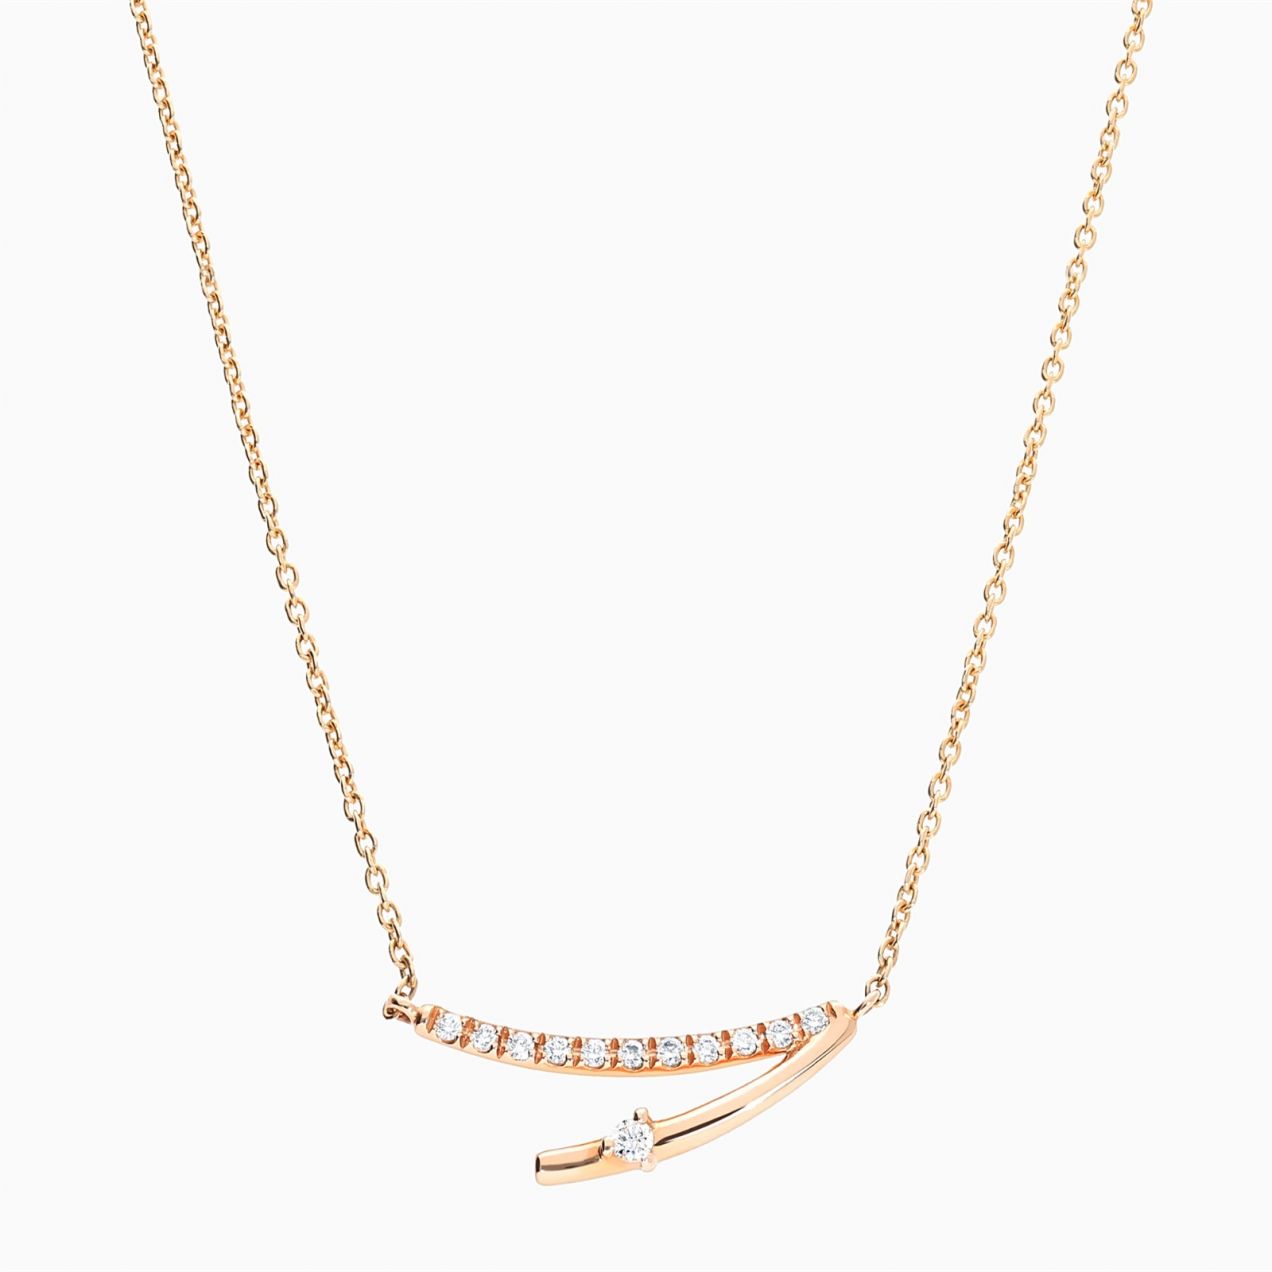 Pink gold rivière pendant with diamonds